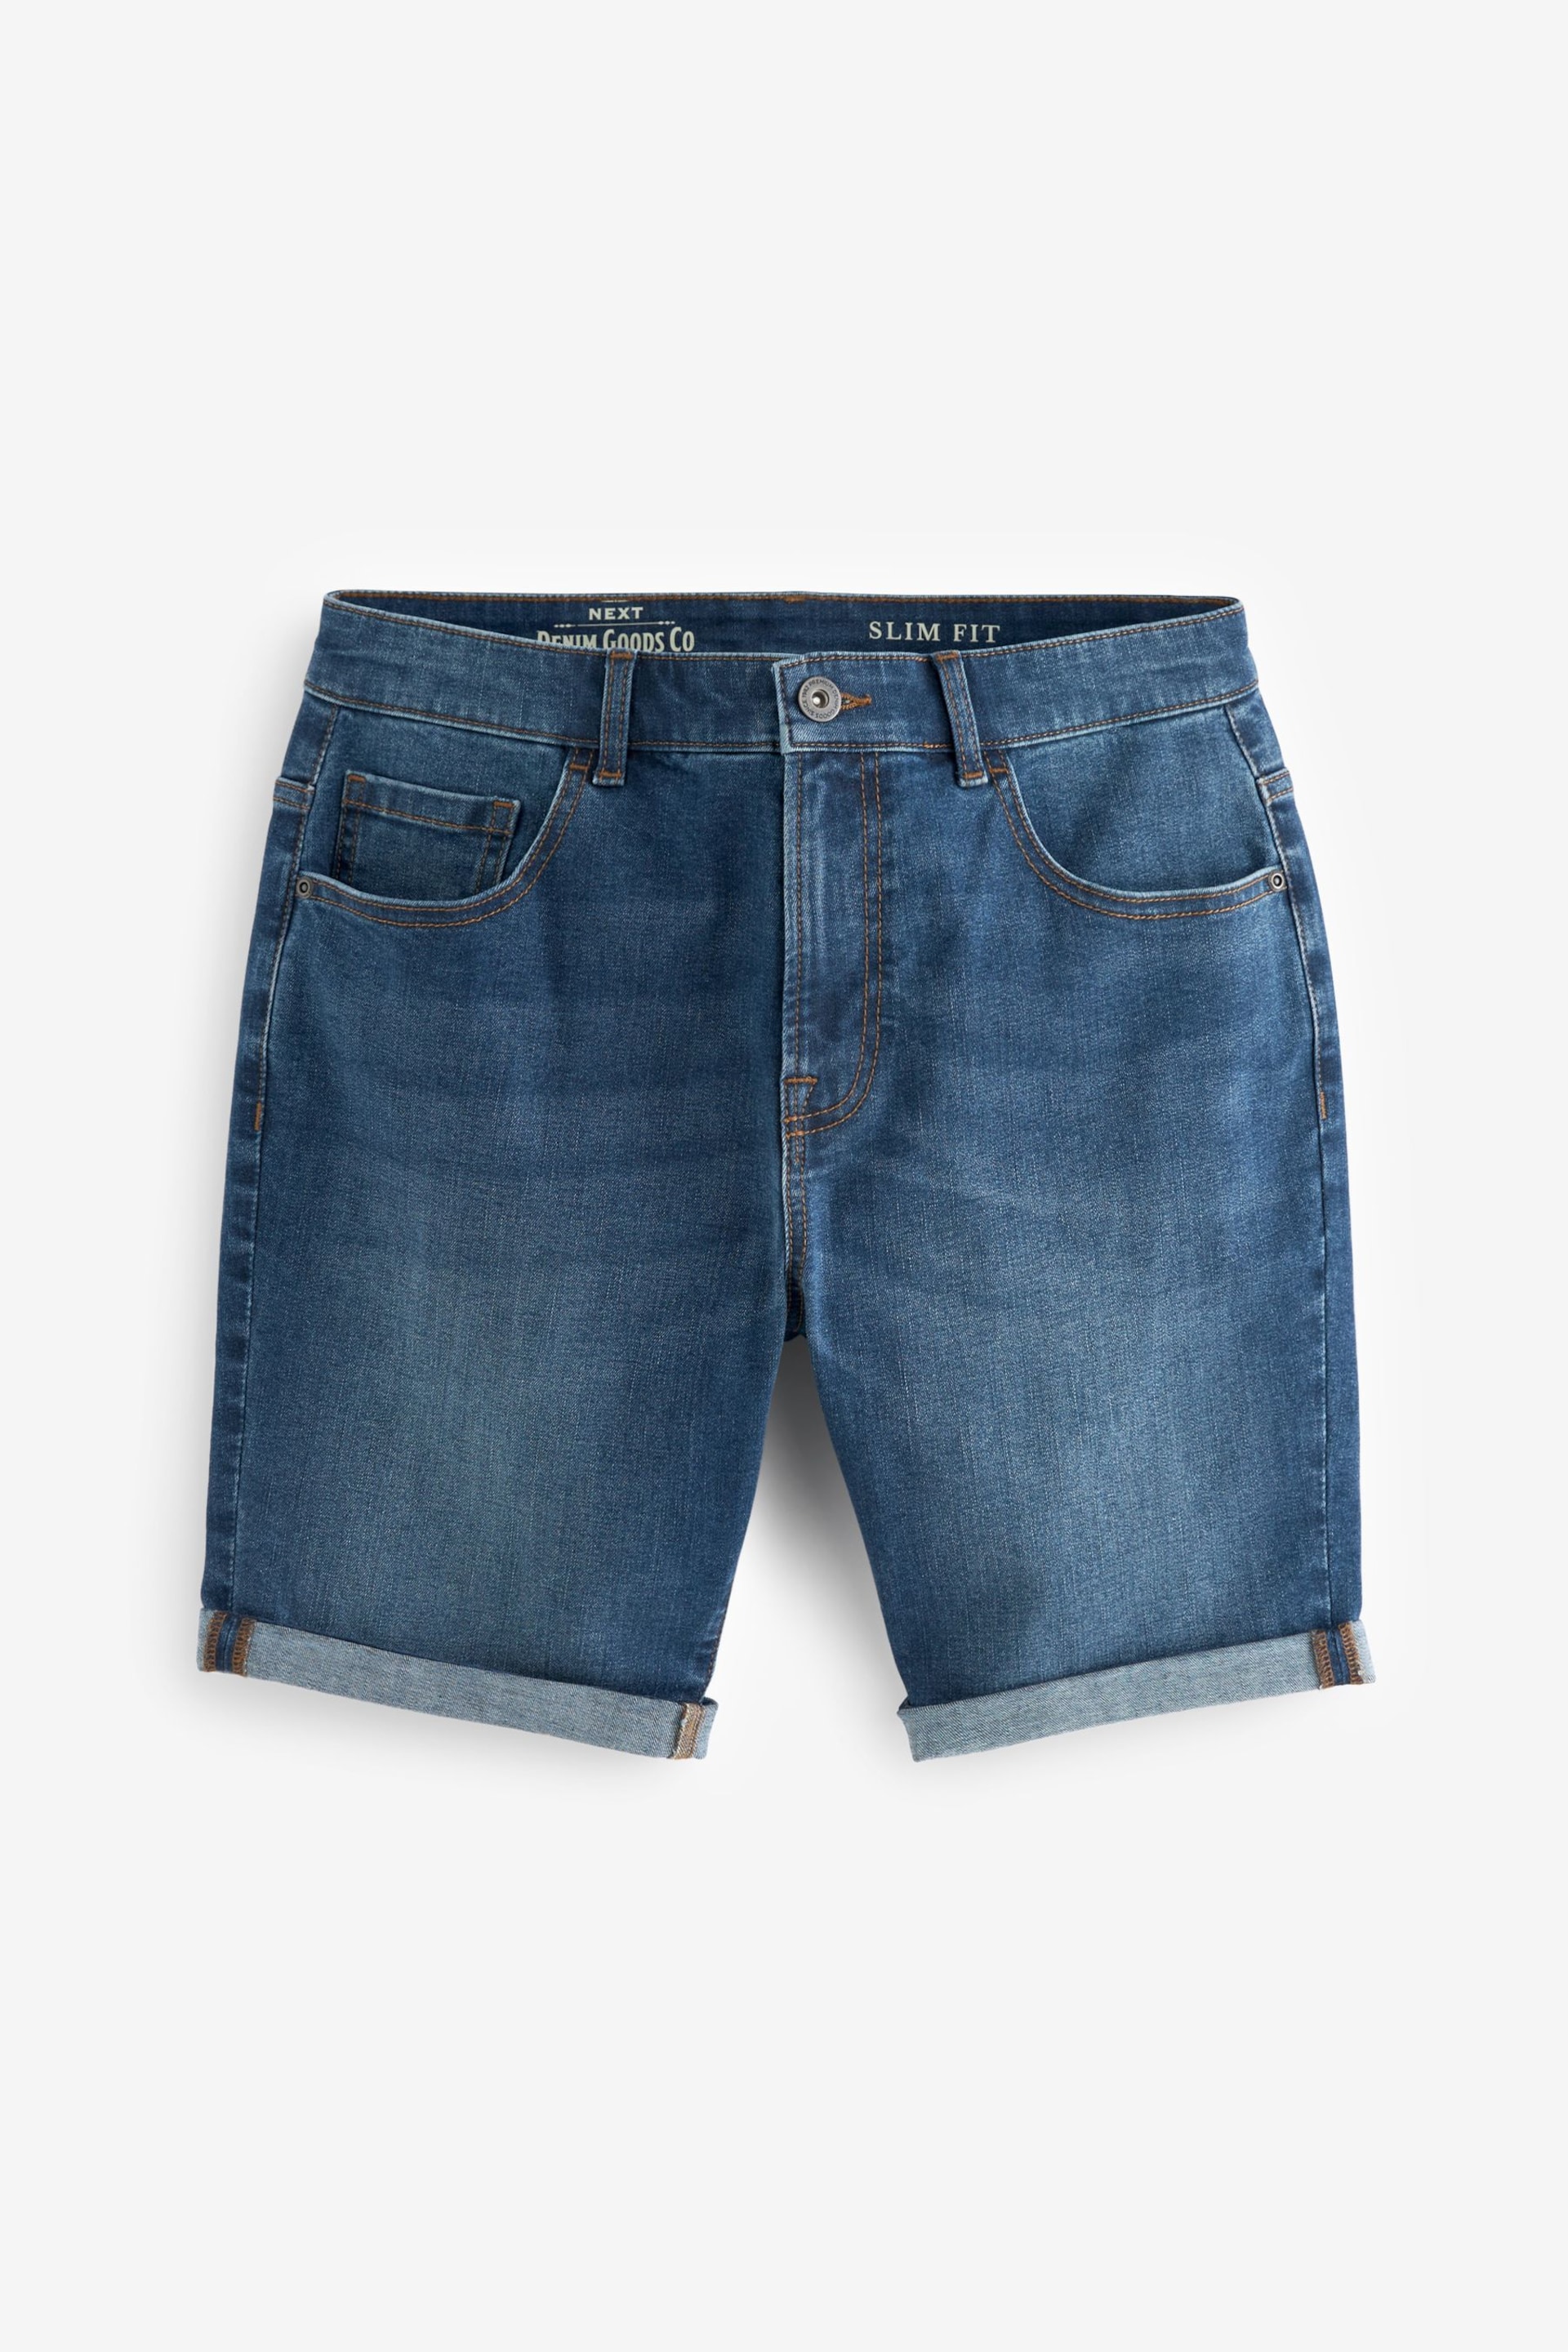 Mid Blue Slim Fit Stretch Denim Shorts - Image 5 of 9